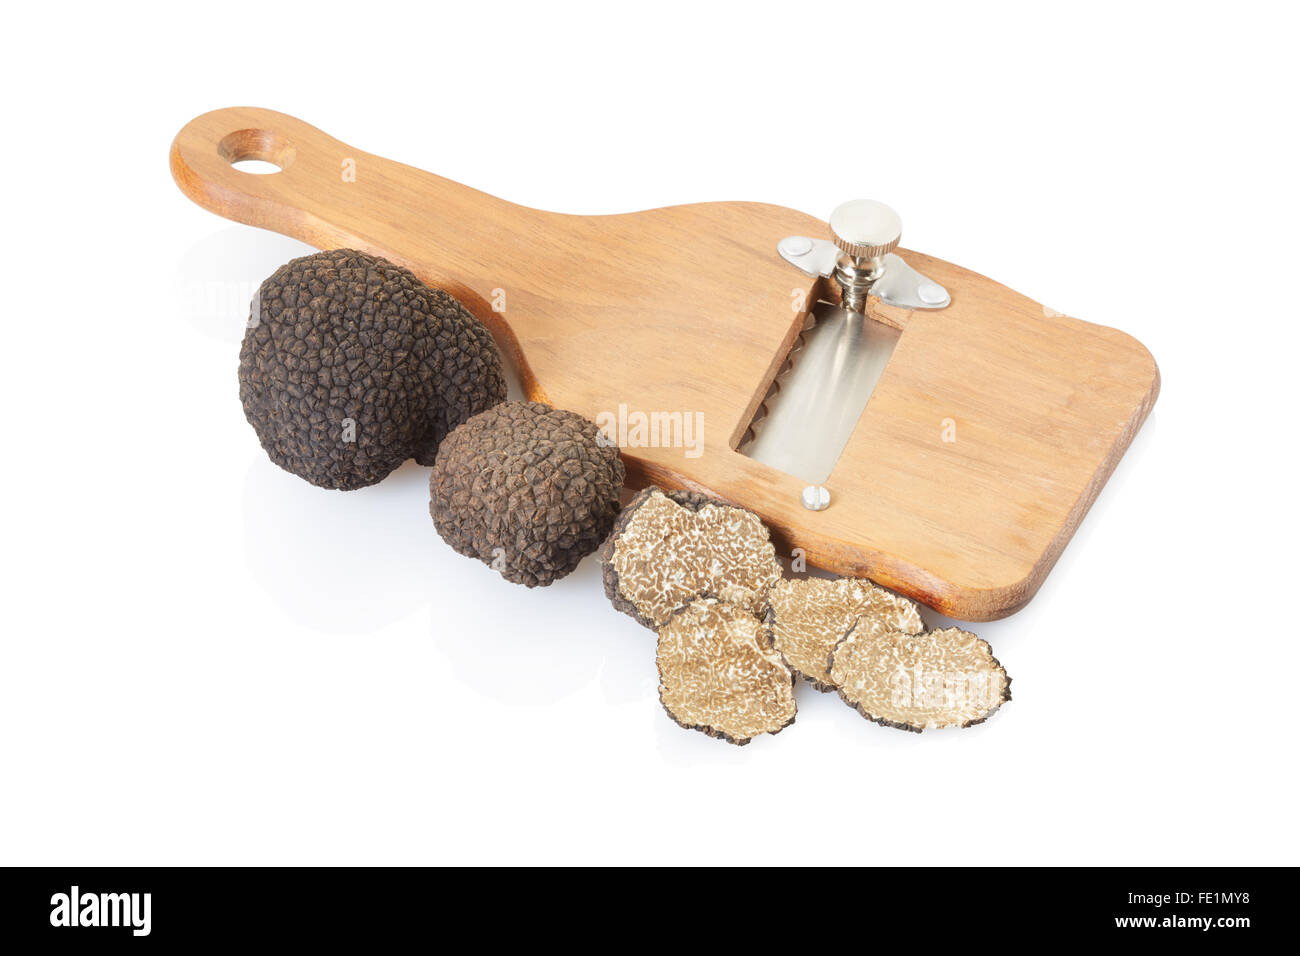 Black truffle, slices and wooden truffle slicer on white Stock Photo